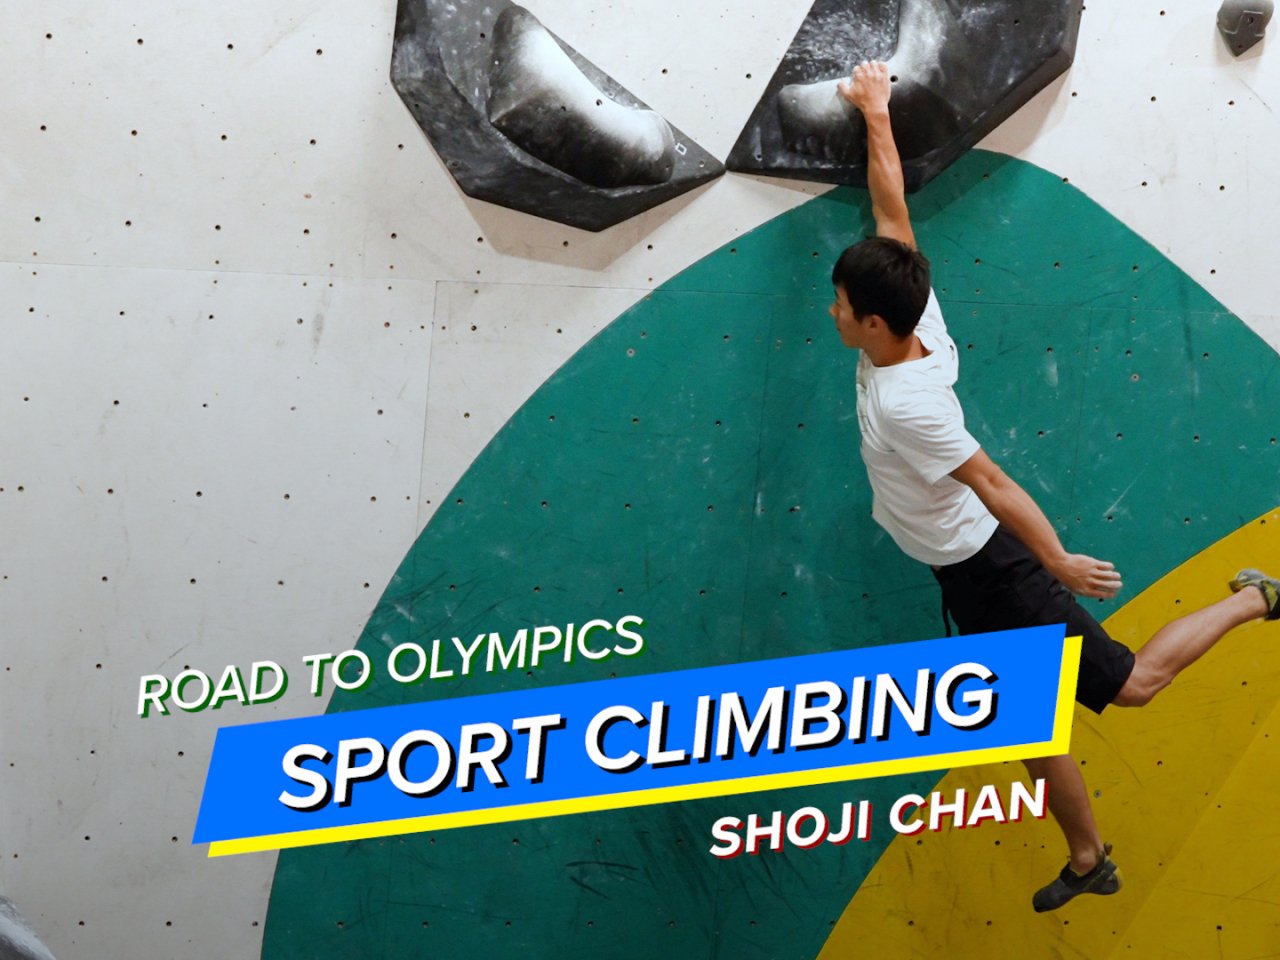 Home-grown climber Shoji Chan targets new heights